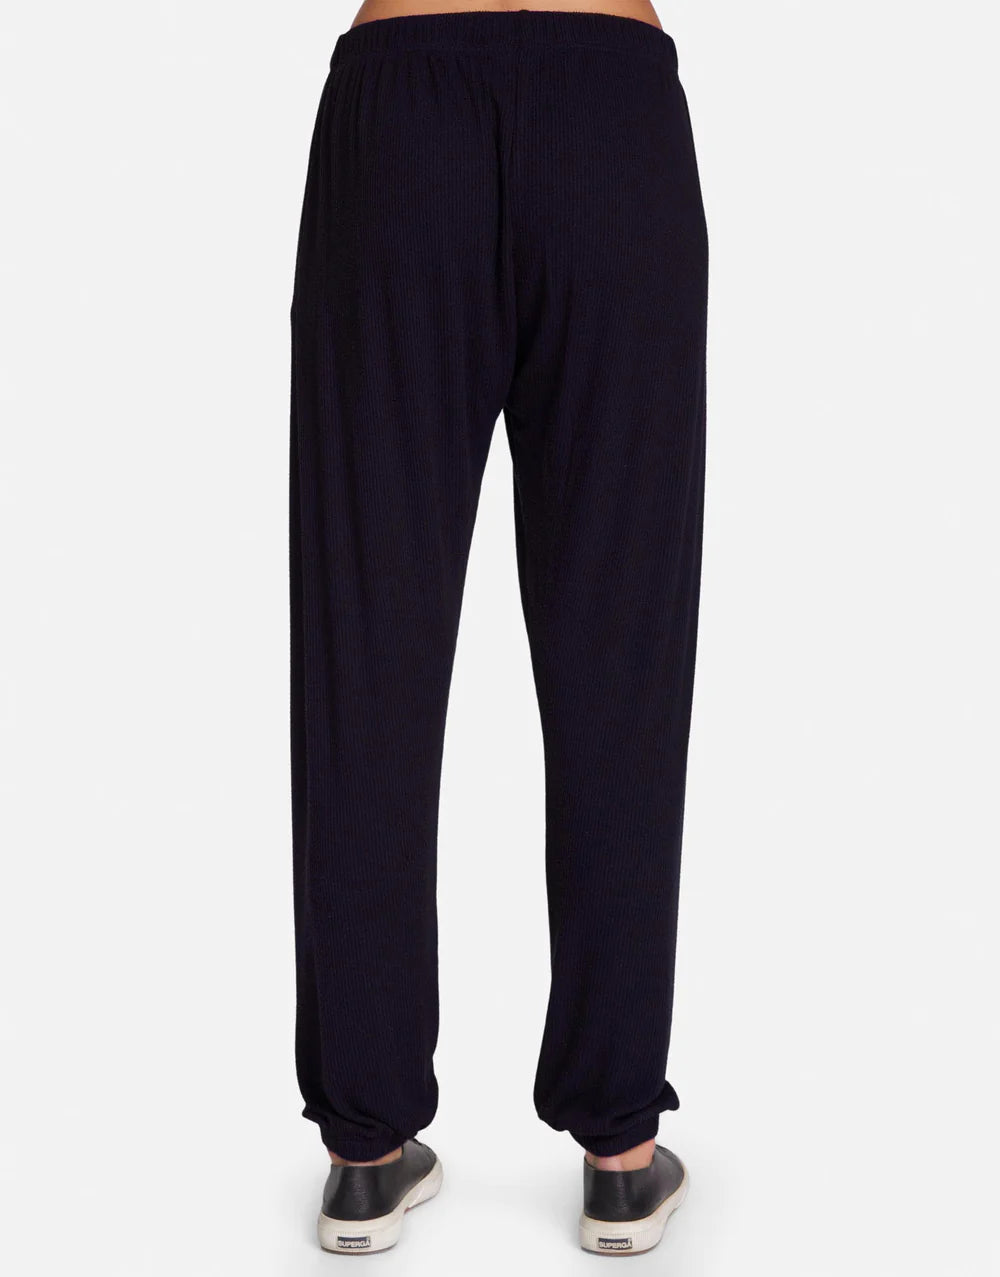 Faysmith Sweatpants by Michael Lauren | Soft Sweater Knit Fabric Elasticized Waistband Brushed Finishing Elasticized Cuff Side Pockets | Alene Too in FL